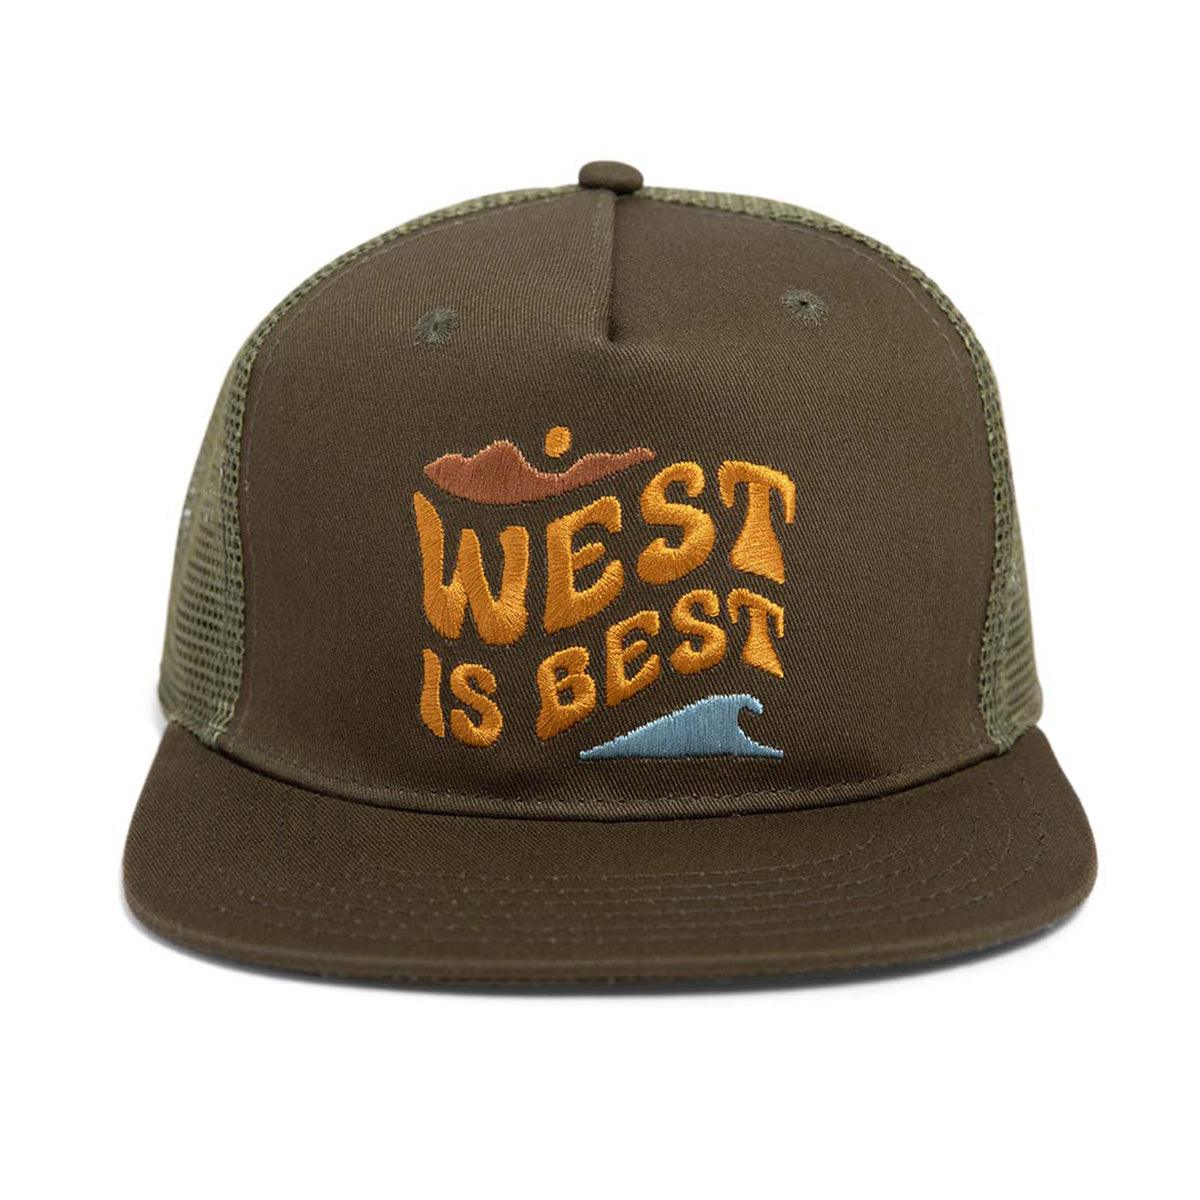 West Is Best Hat - undefined - Trek Light